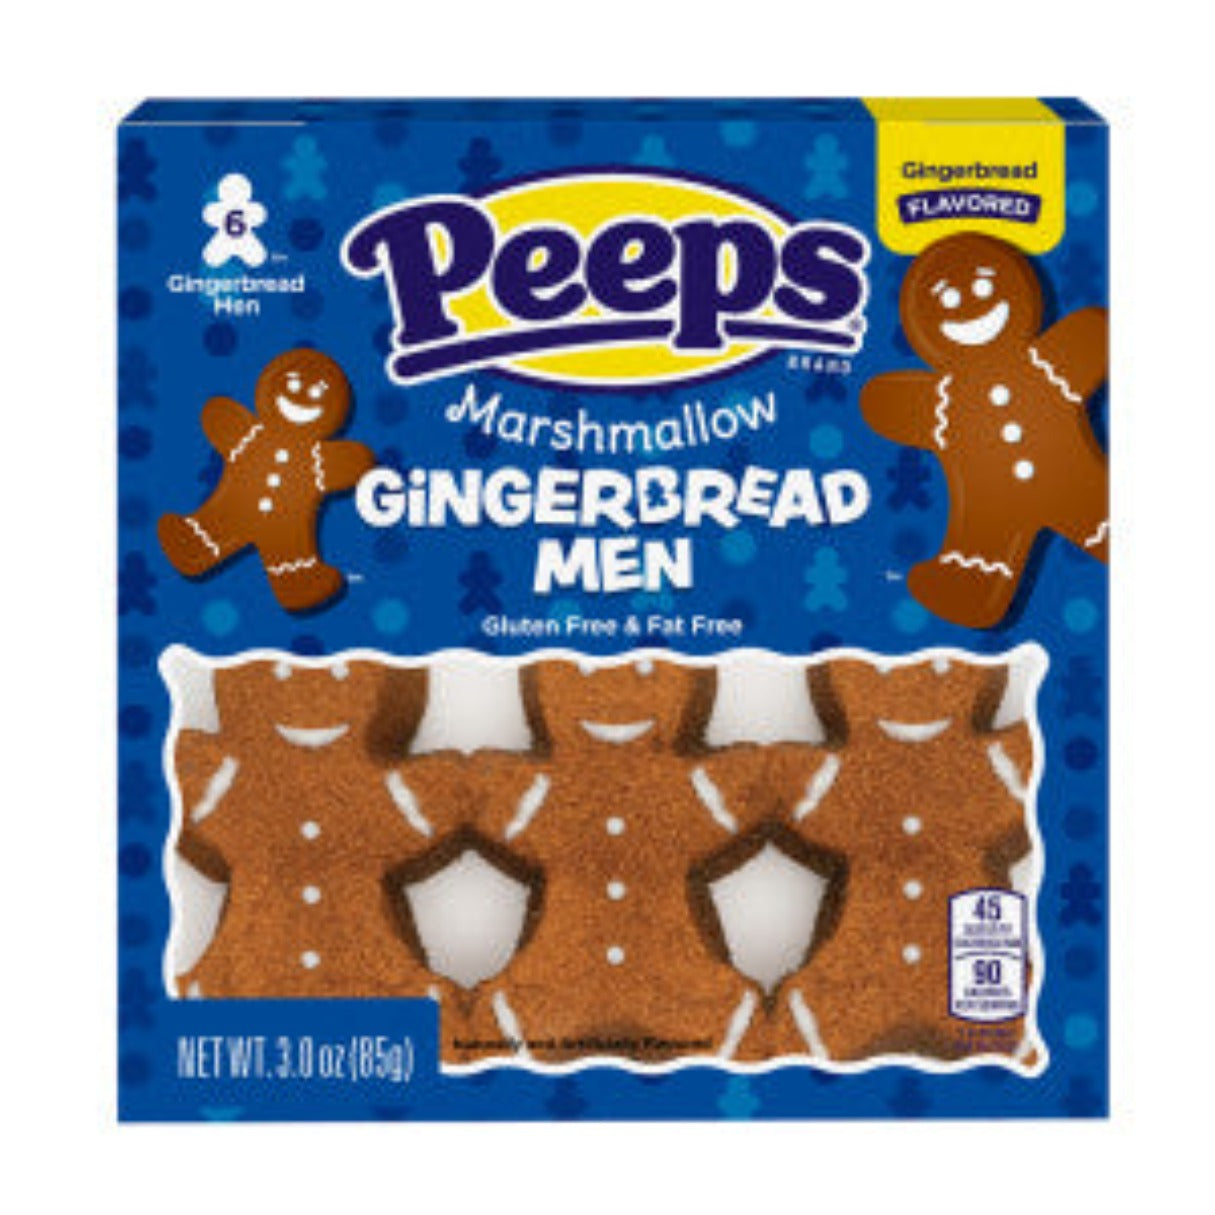 Gingerbread Men Peeps 3oz - 12ct